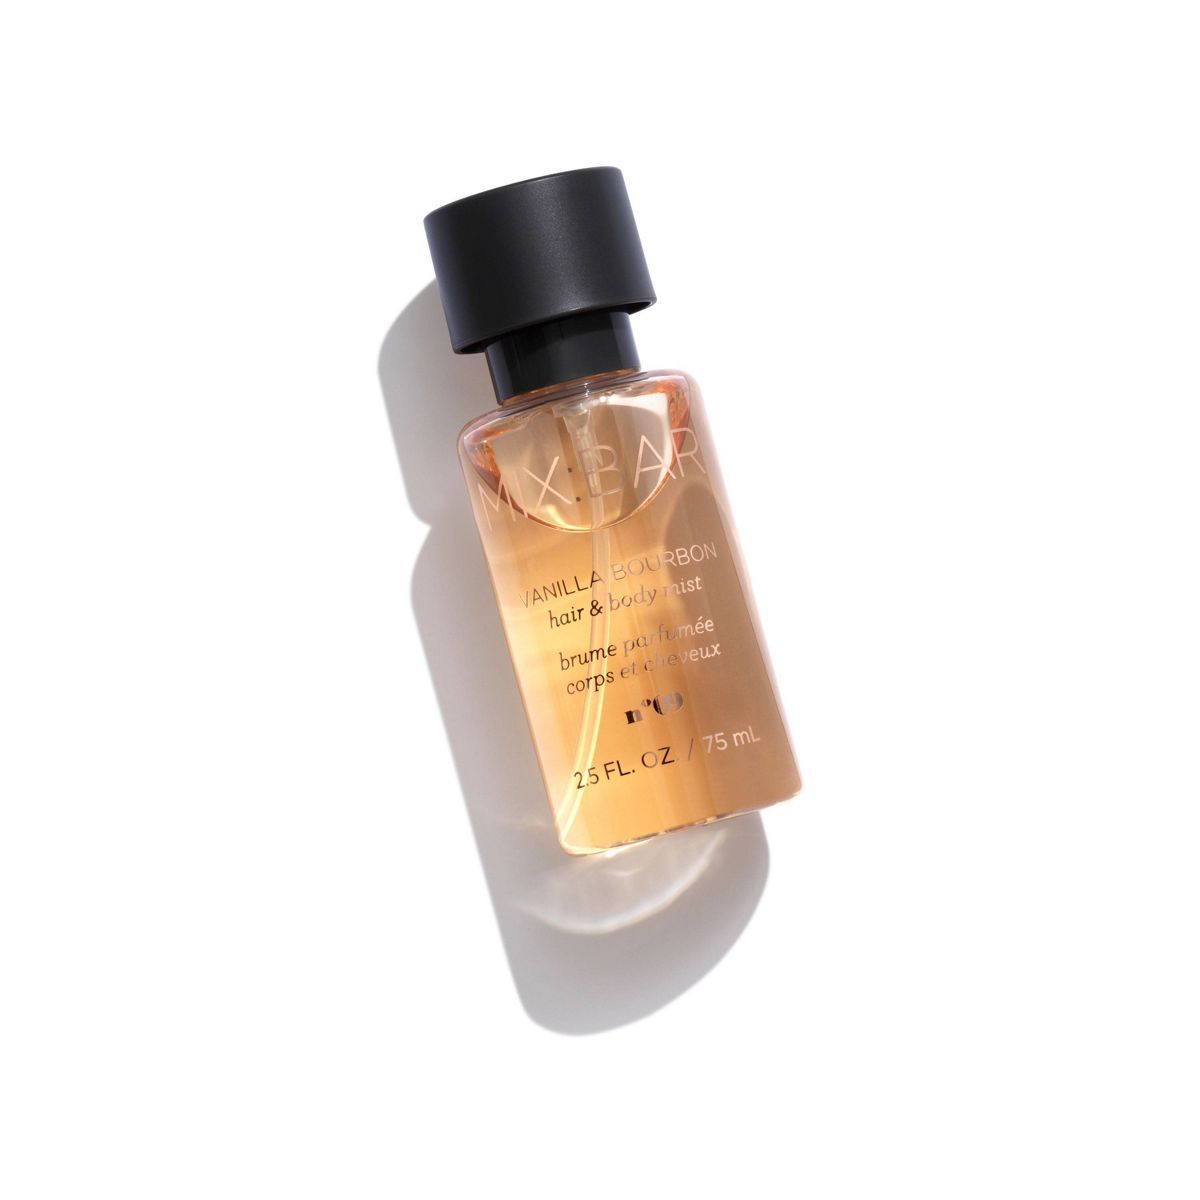 MIX:BAR Mini Hair & Body Mist Perfume - Vanilla Bourbon - 2.5 fl oz | Target